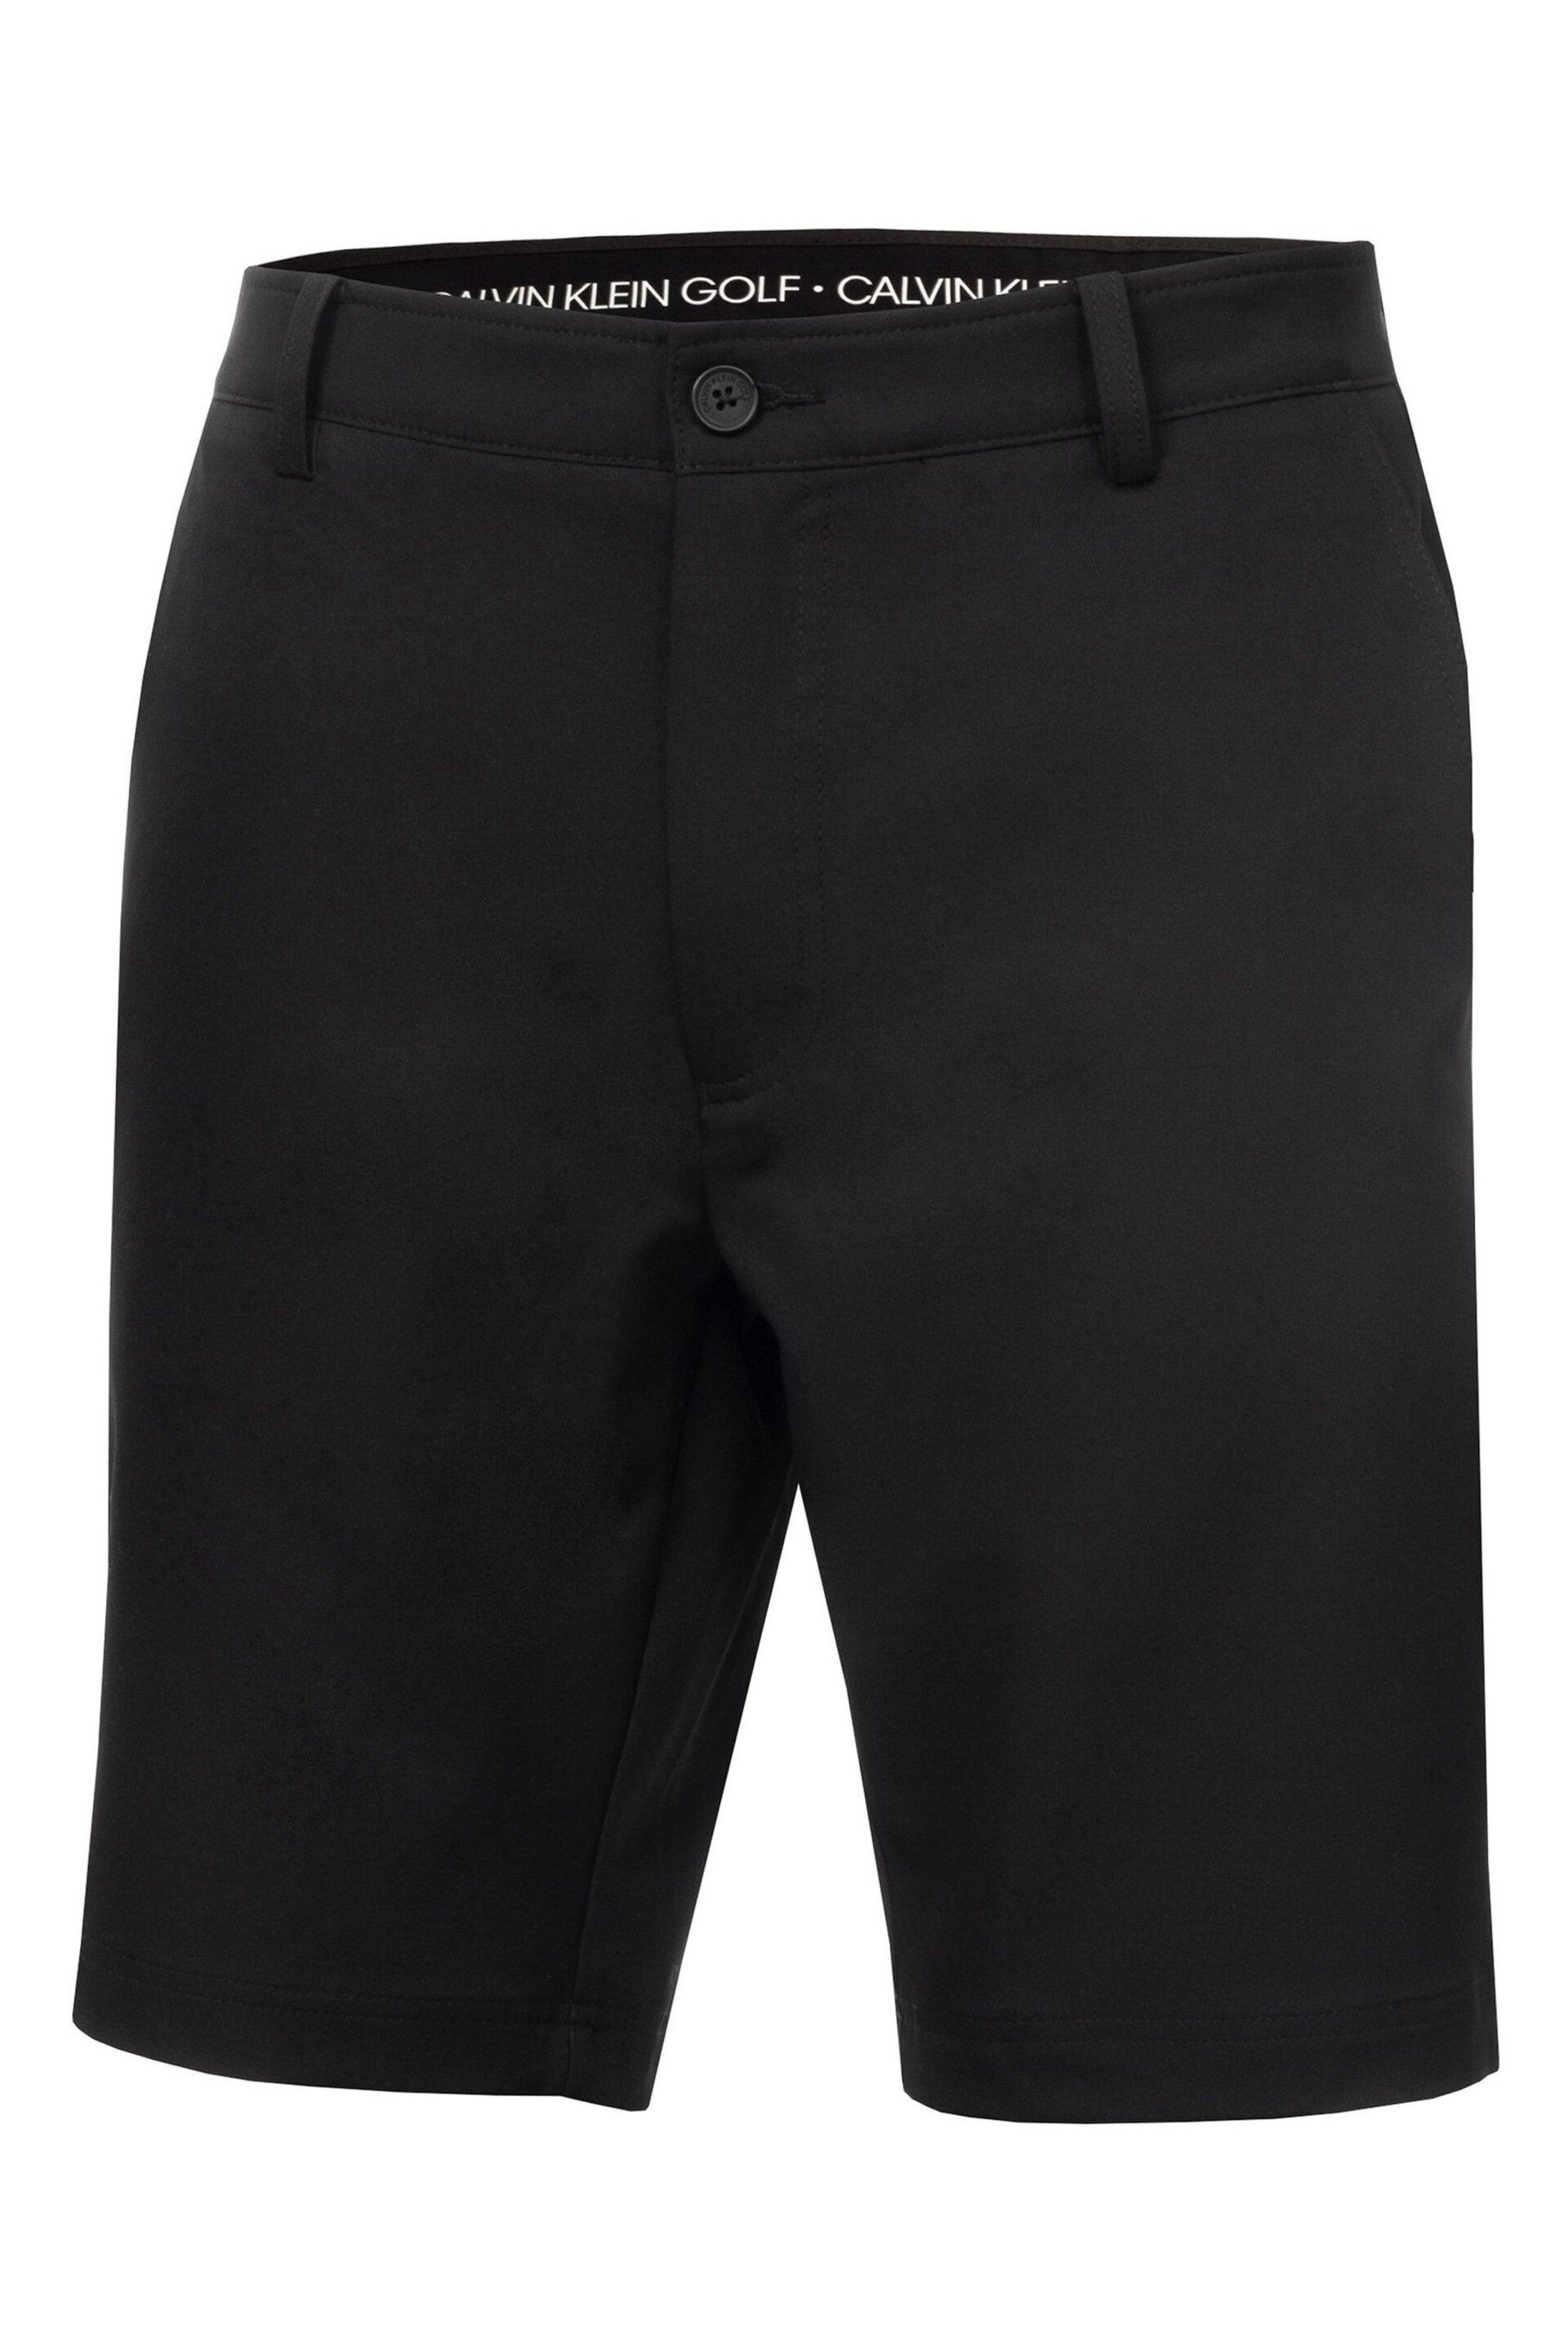 Calvin Klein Golf Bullet Regular Fit Stretch Shorts - Image 6 of 6